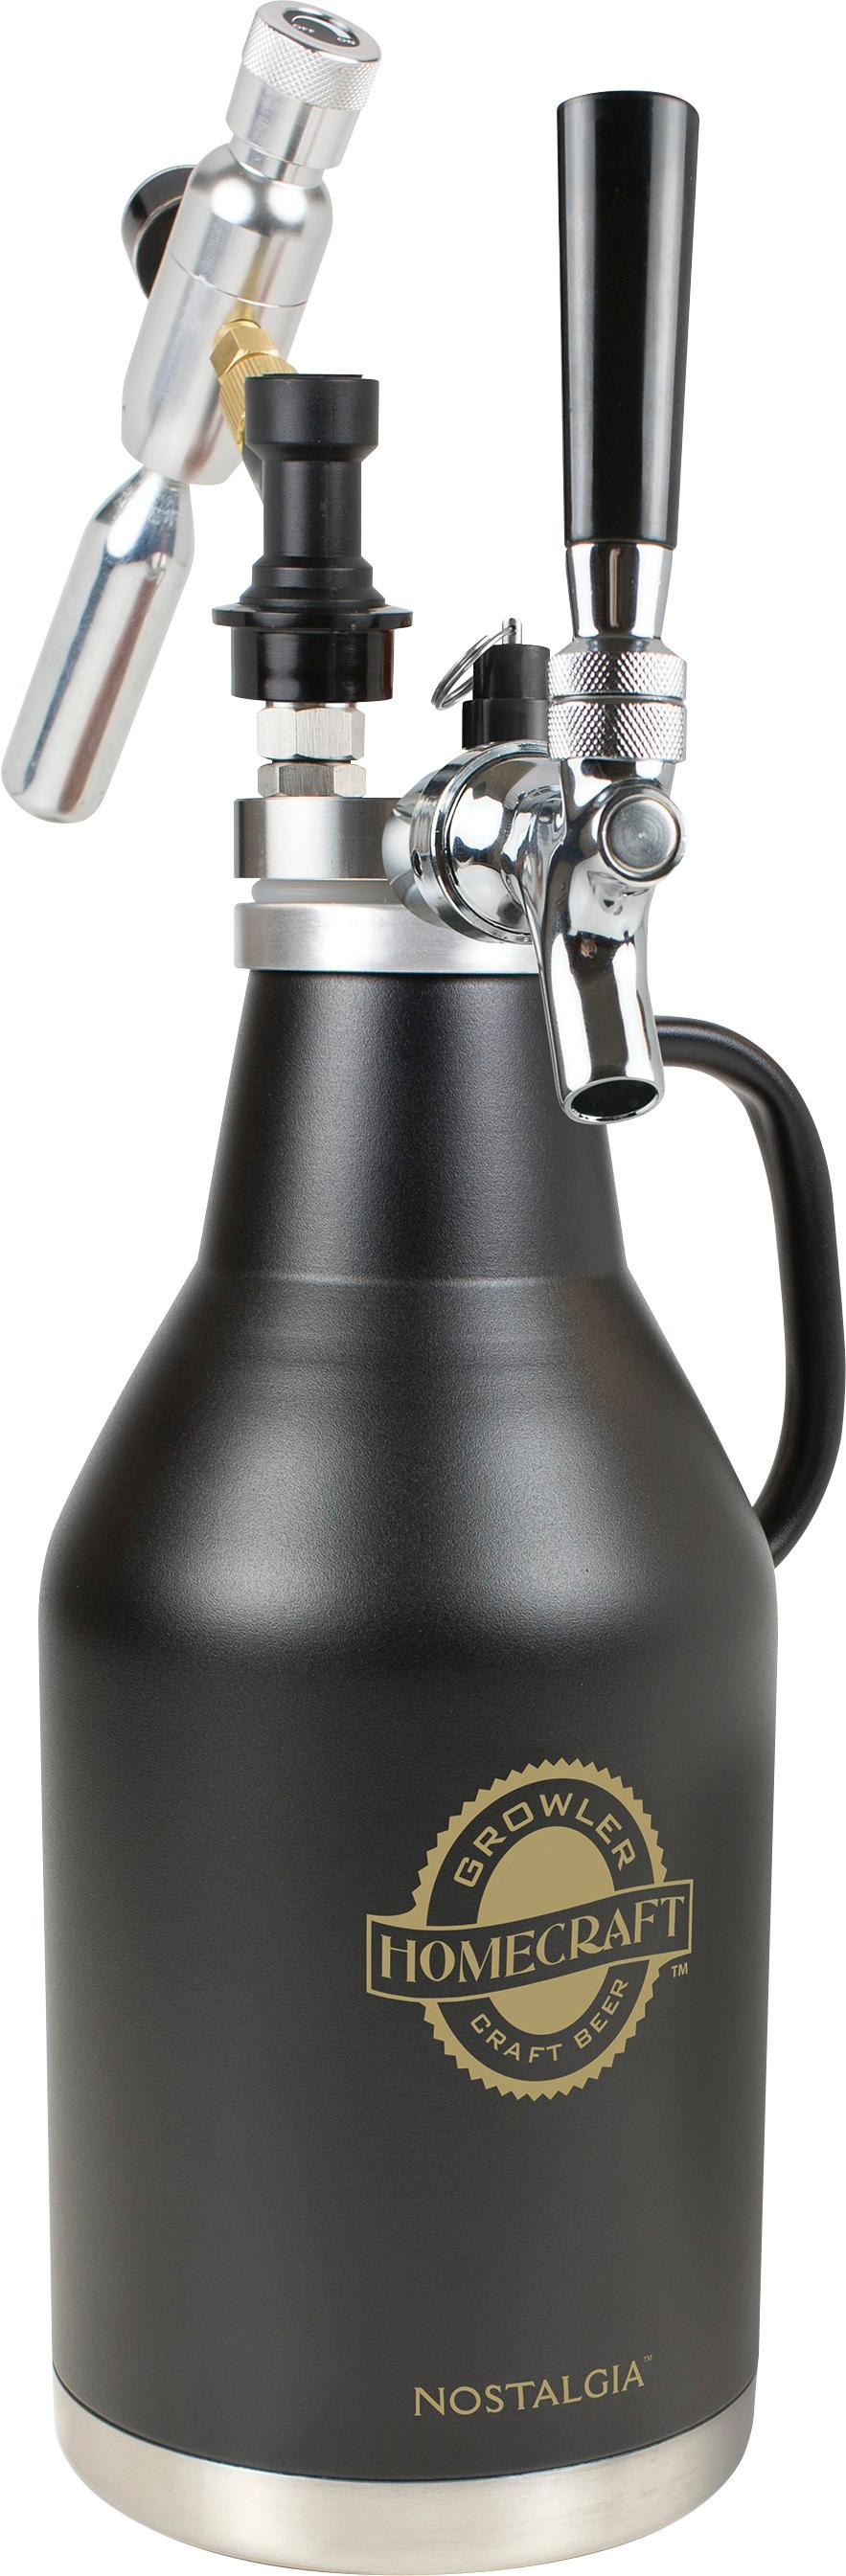 HomeCraft CBG64 Beer growler 2-liter Black